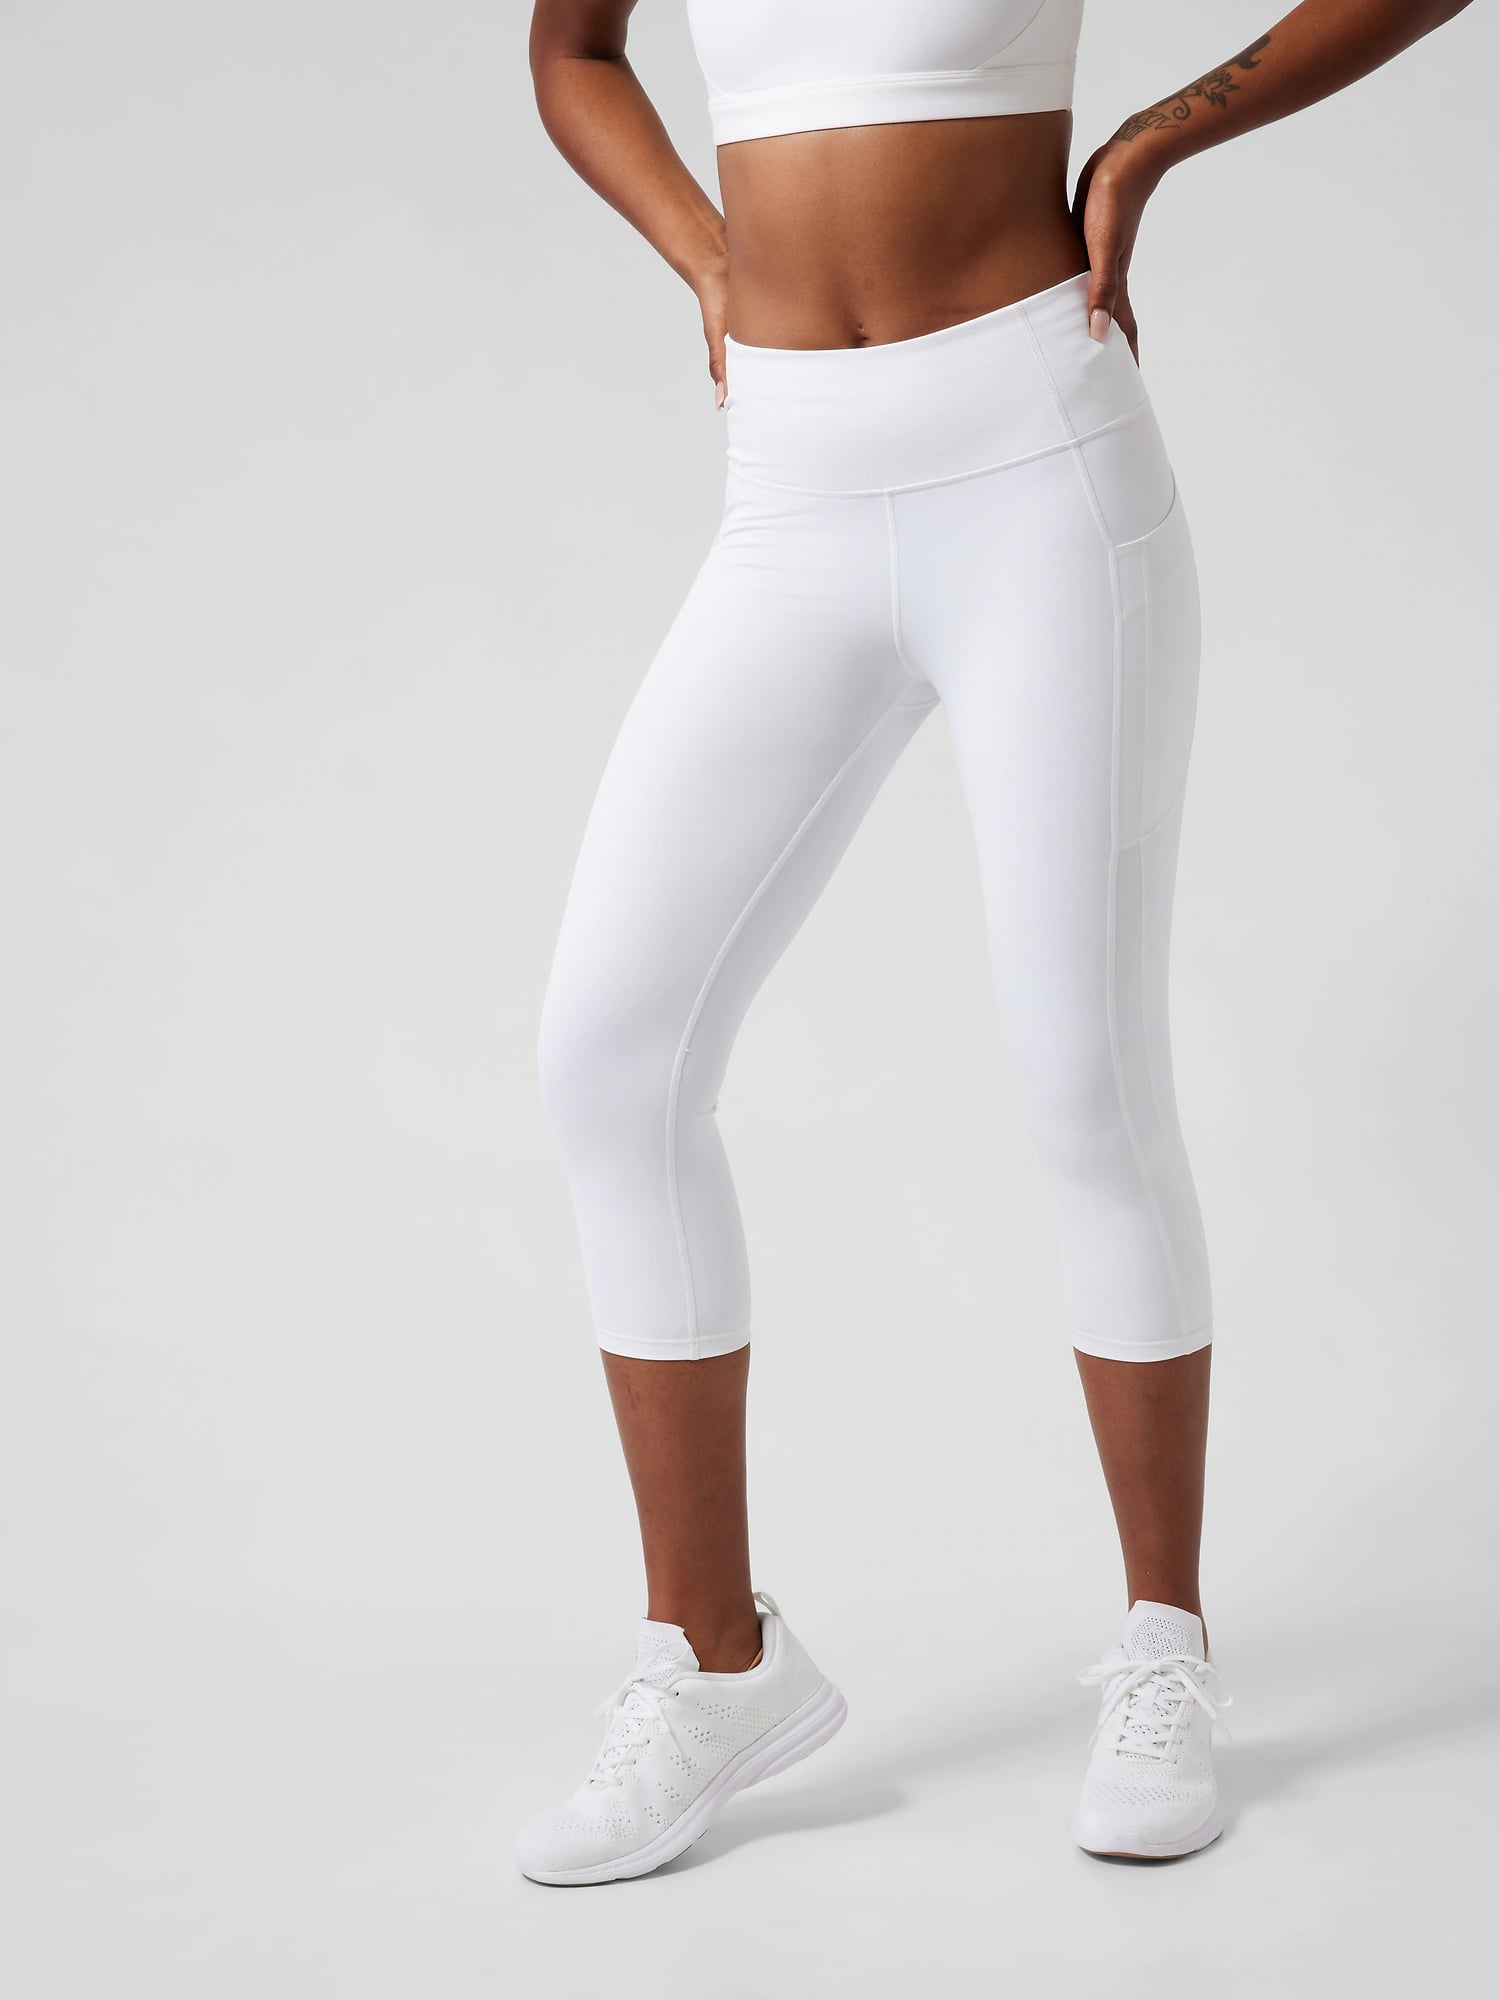 Luxana Leggings - Goddess White  Gym clothes women, Gym outfit